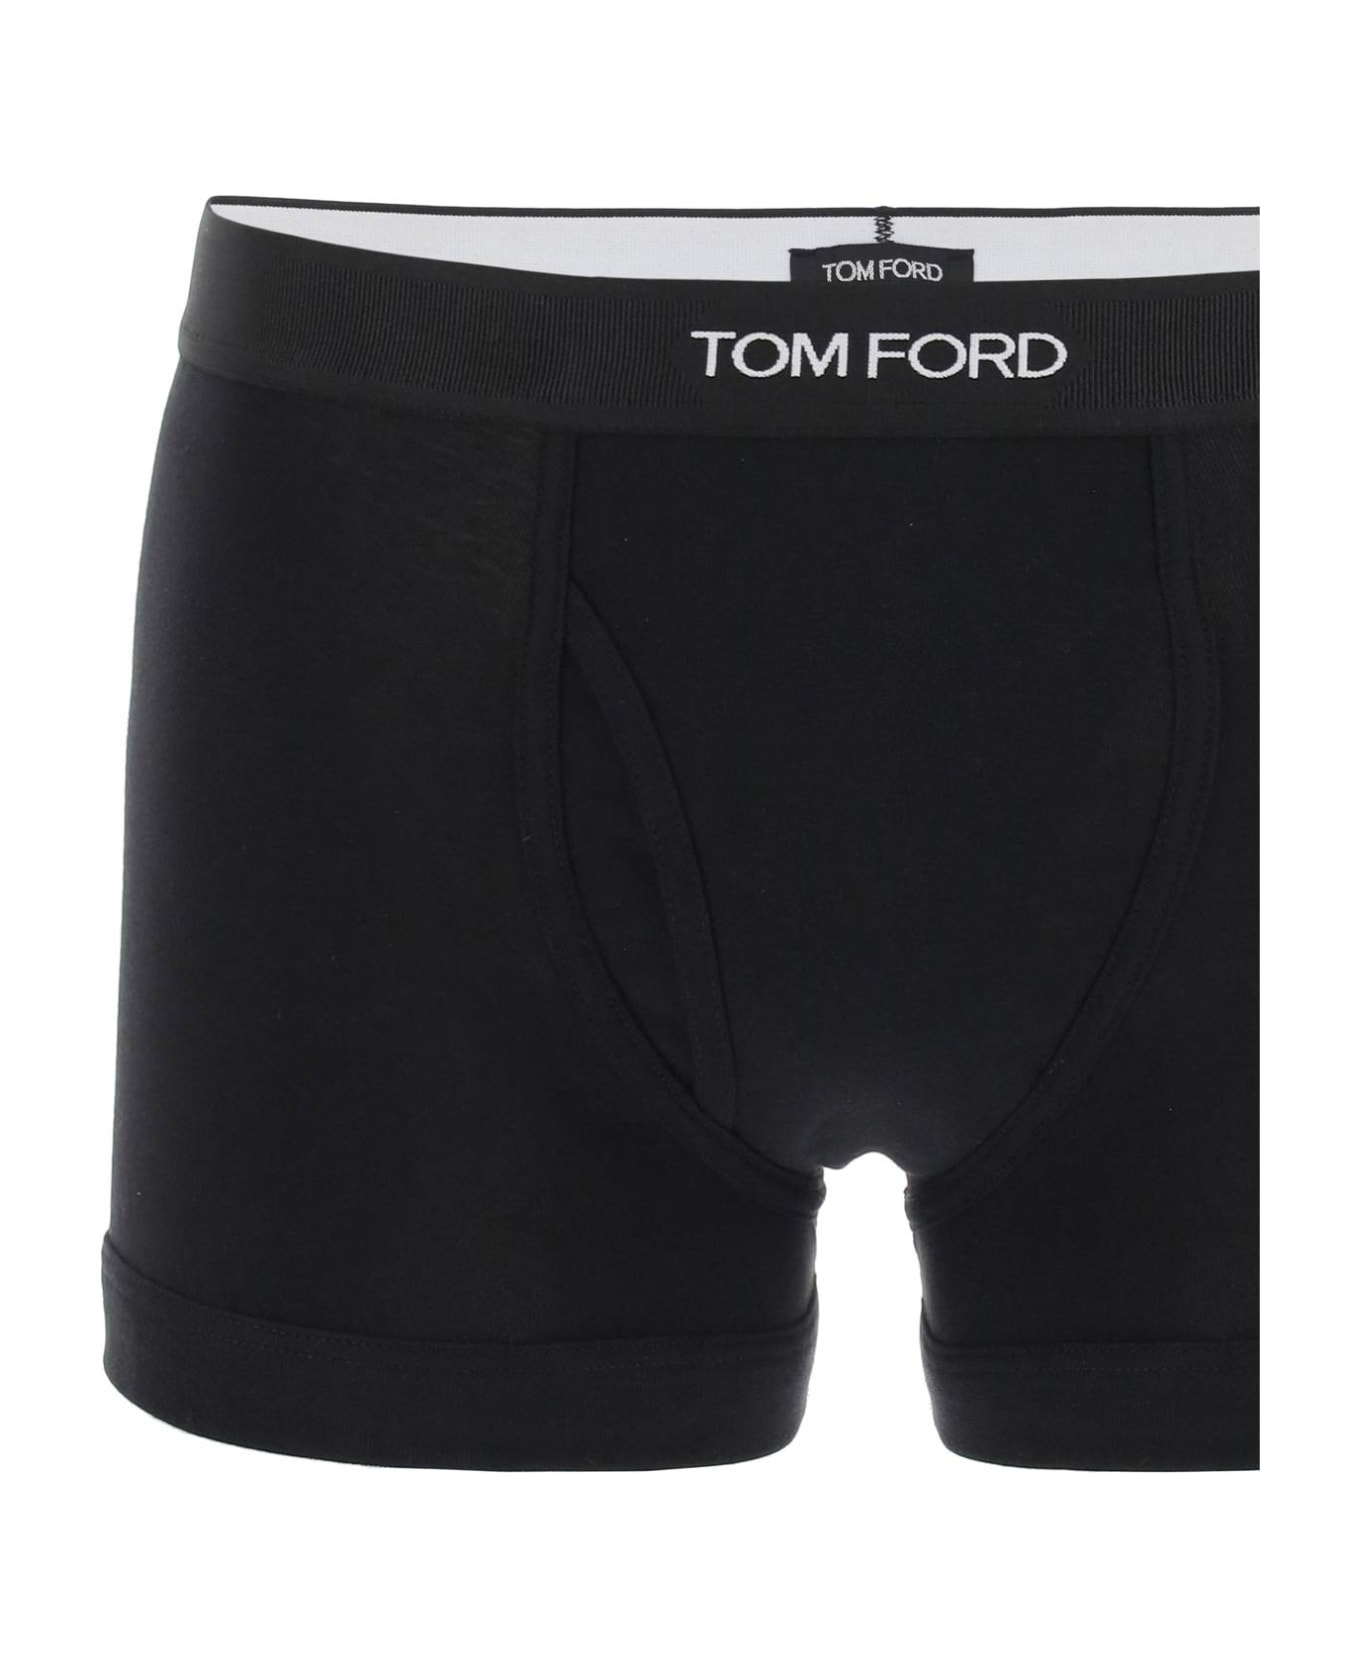 Tom Ford Logo Print Cotton Trunks - black ショーツ